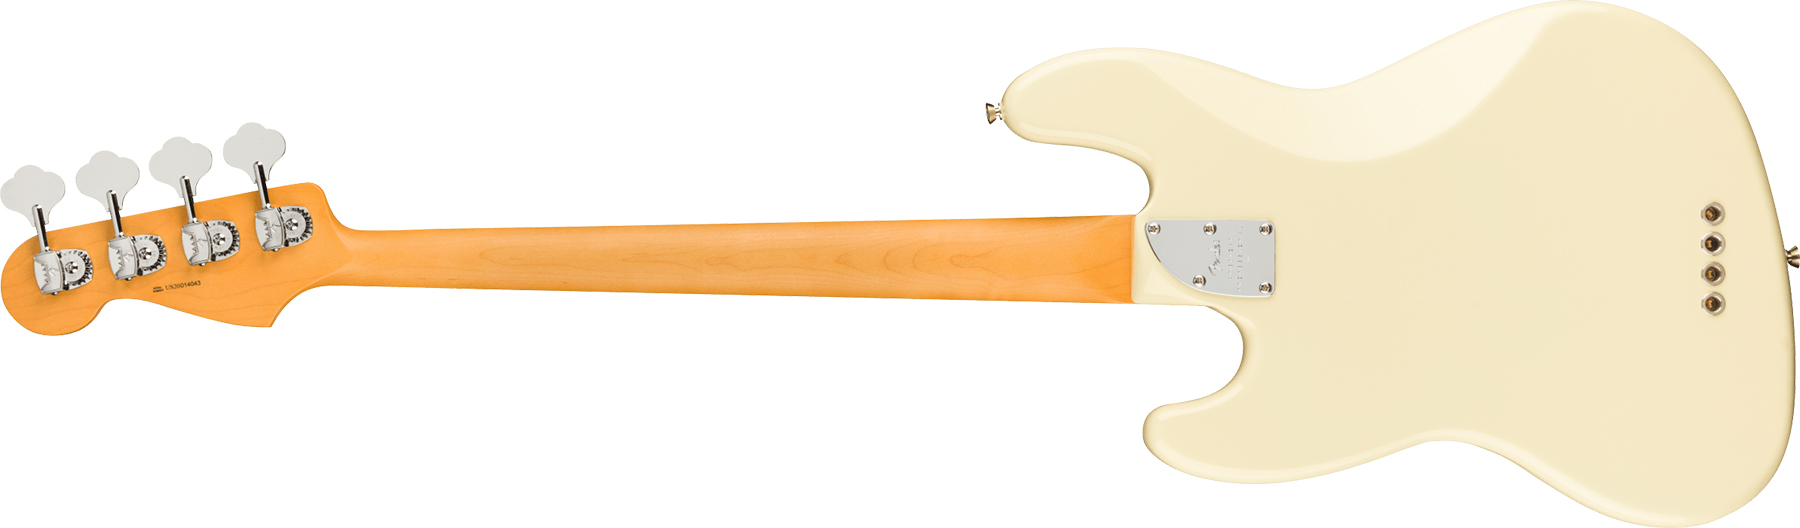 Fender Jazz Bass American Professional Ii Lh Gaucher Usa Rw - Olympic White - Bajo eléctrico de cuerpo sólido - Variation 1